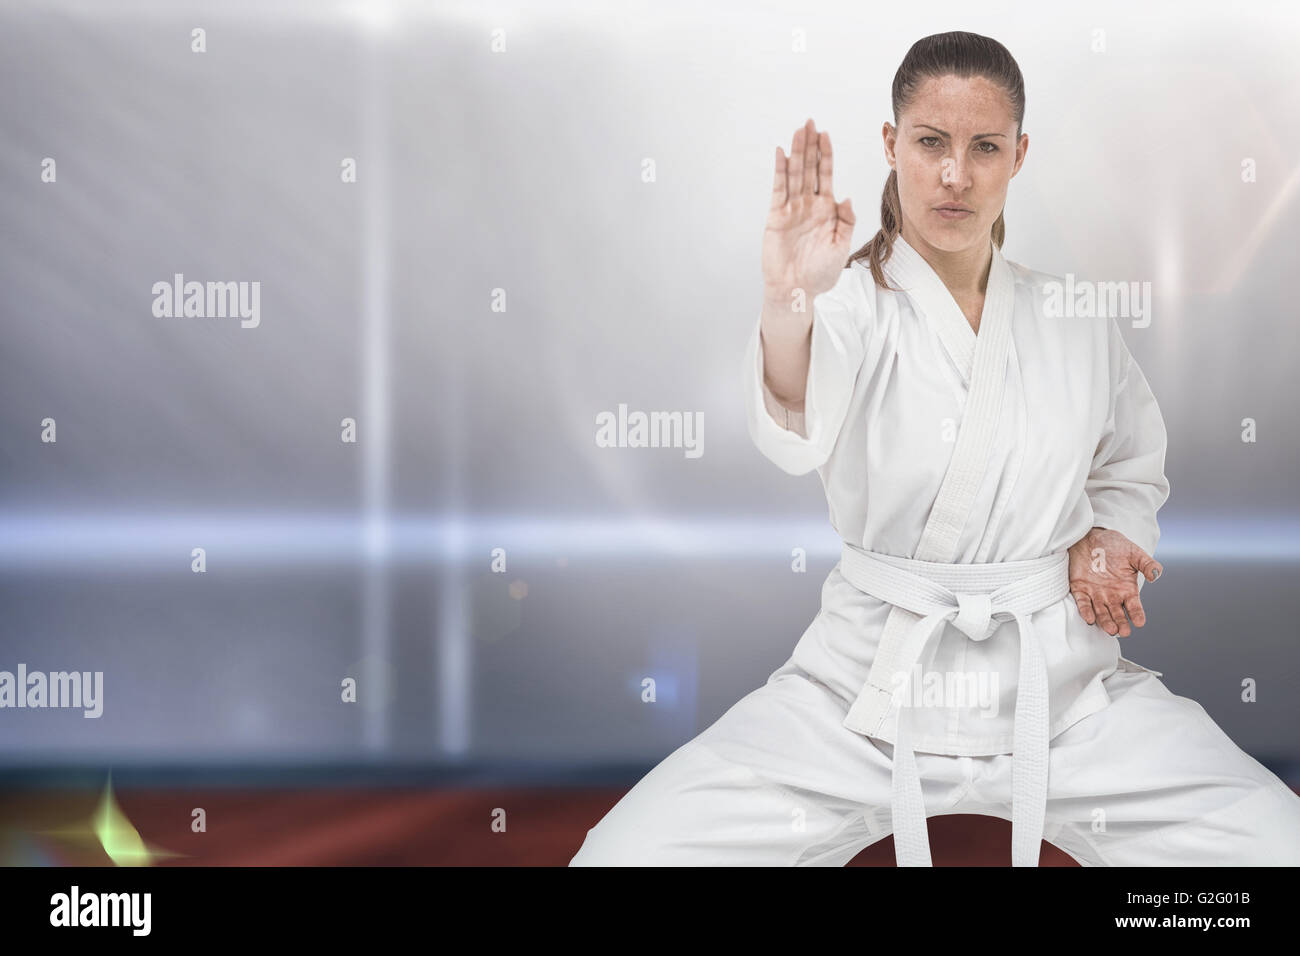 Imagen compuesta de combatiente femenino postura realizar karate Foto de stock